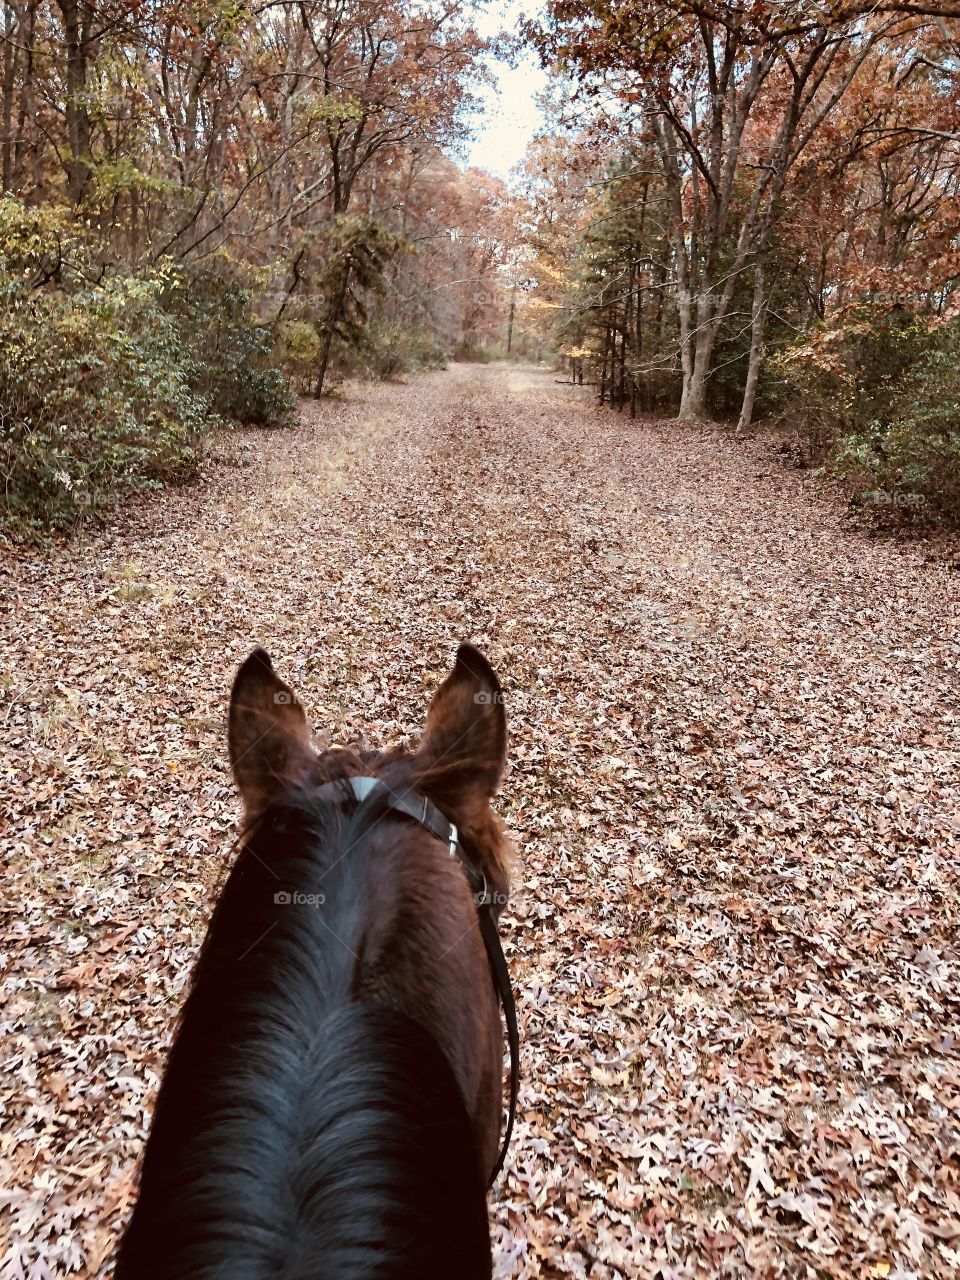 Horseback riding in fall